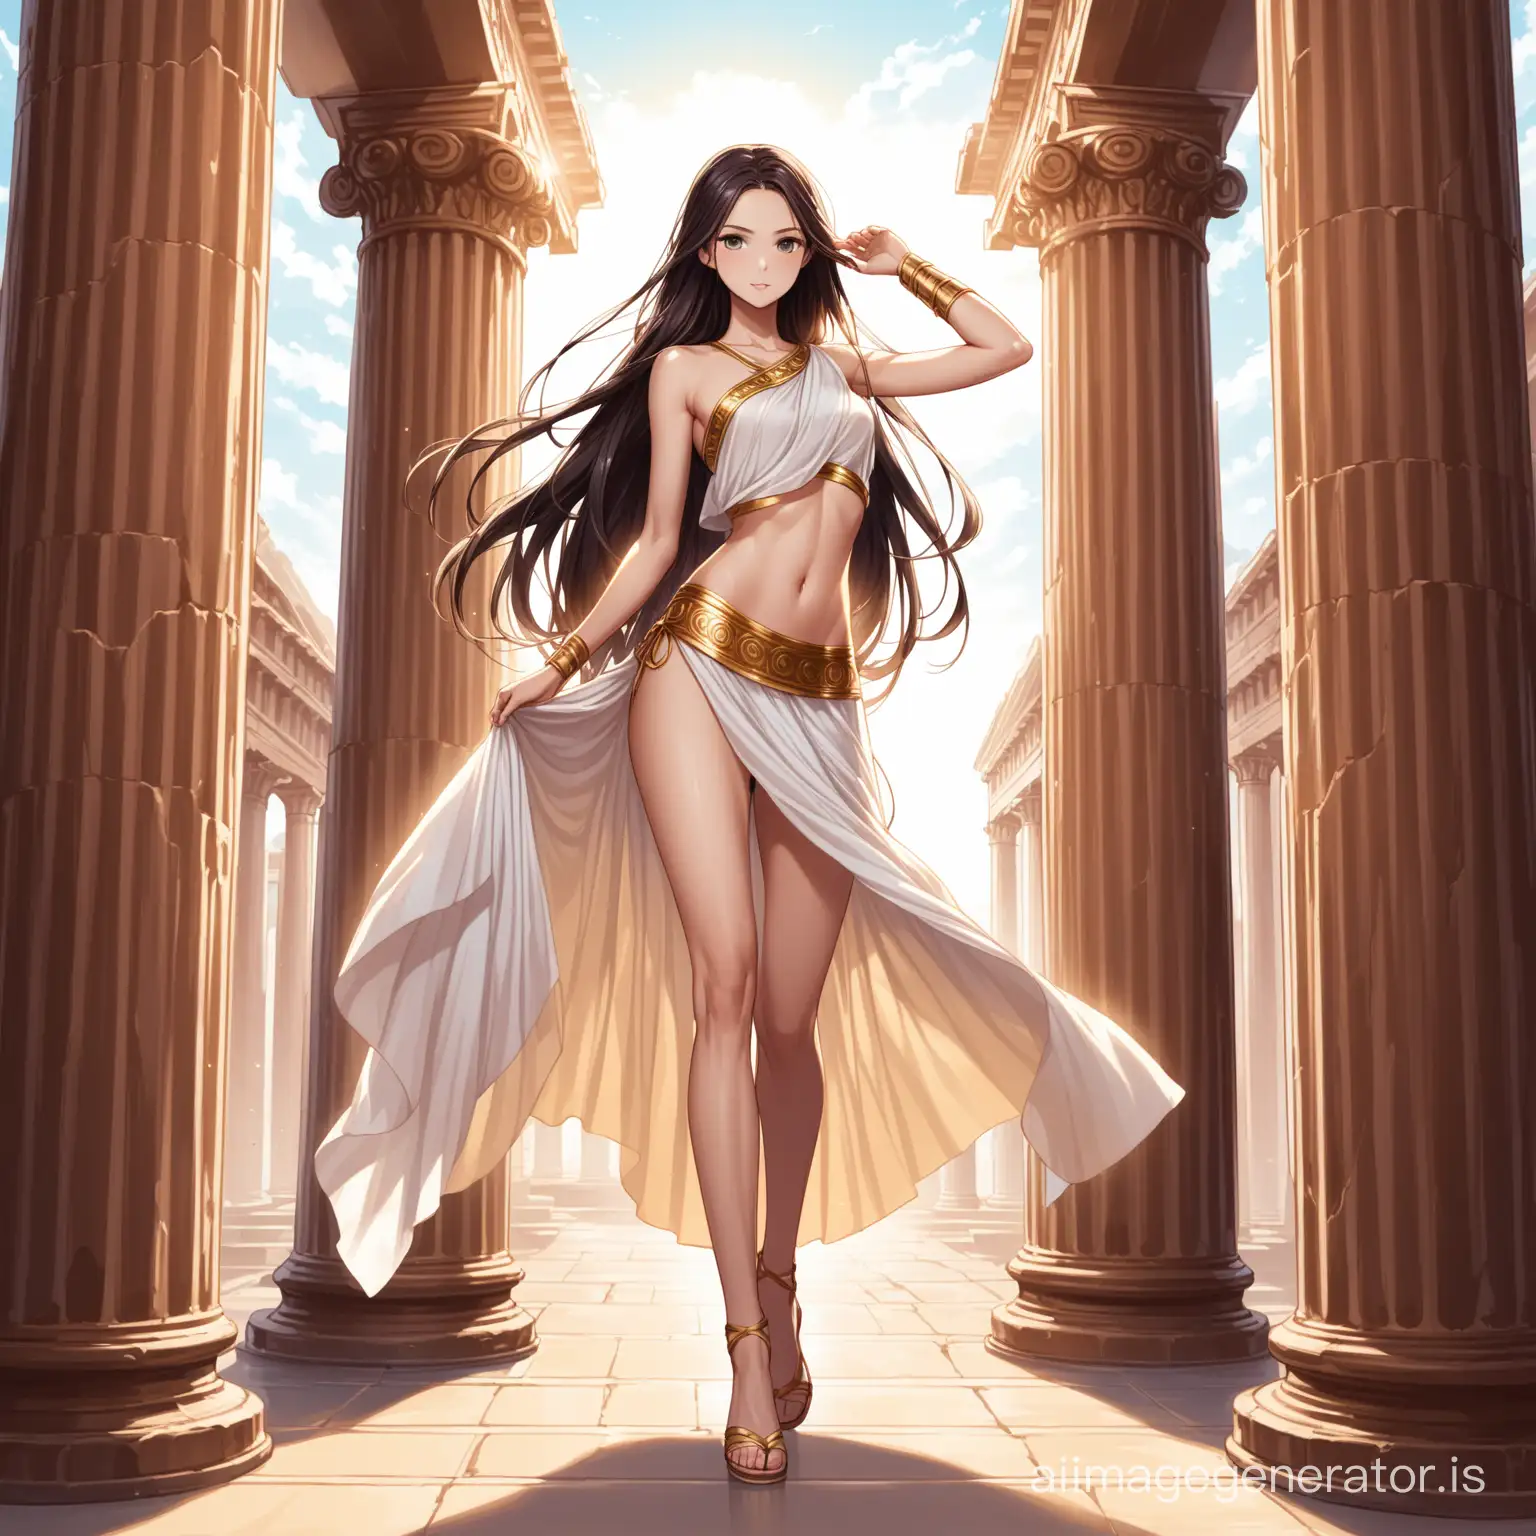 beautiful long hair slender woman in a revealing or transparent toga, Roman pillars background, lifting skirt up,